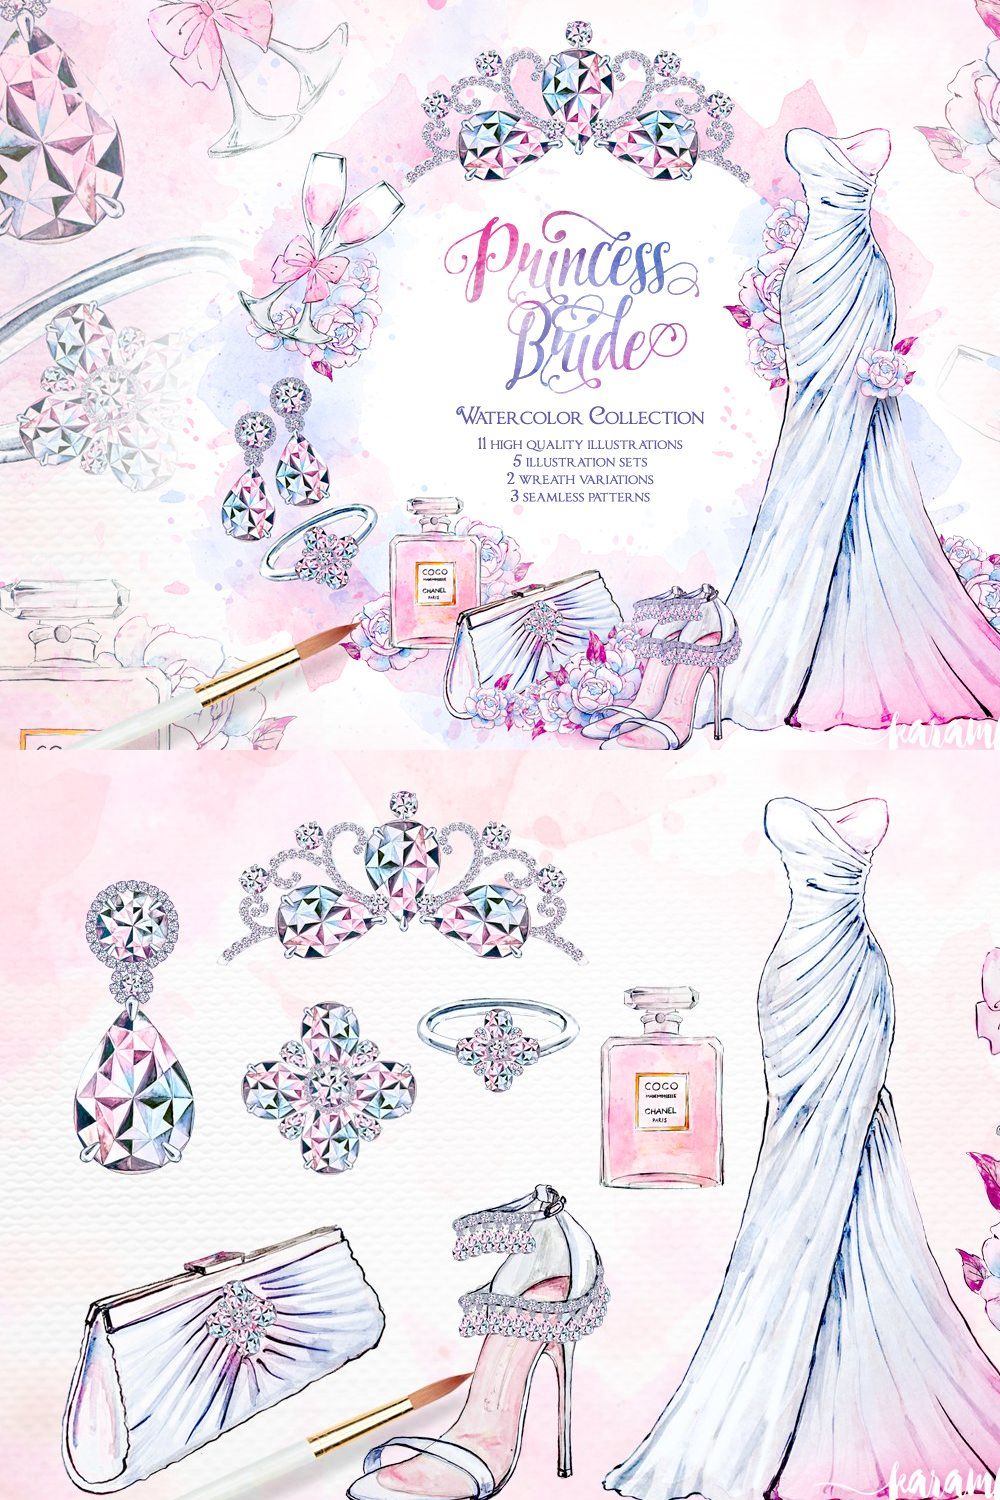 Princess Bride Wedding Collection pinterest preview image.